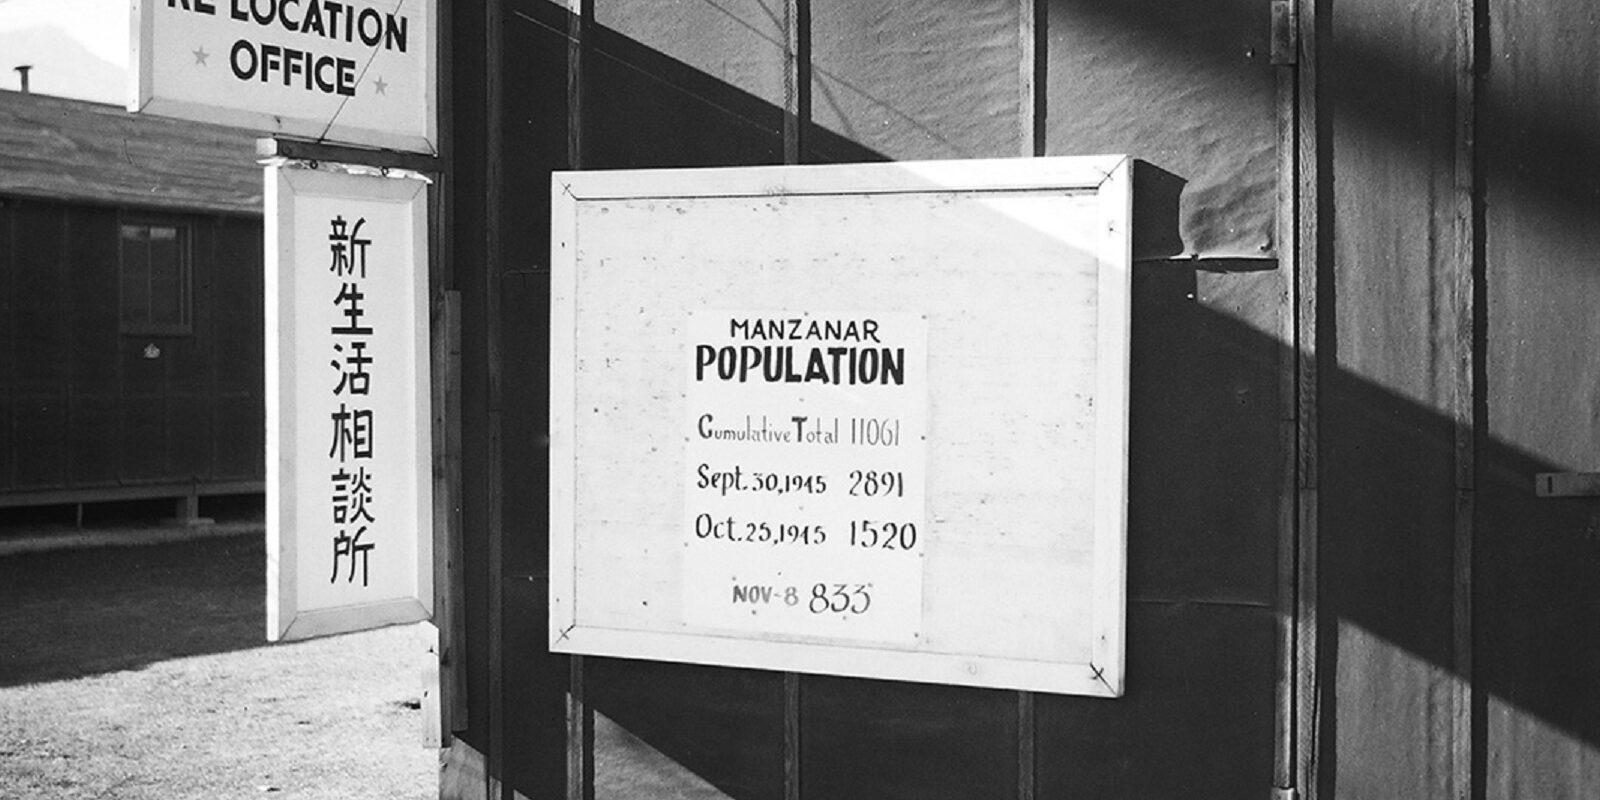 The Manzanar Relocation Office